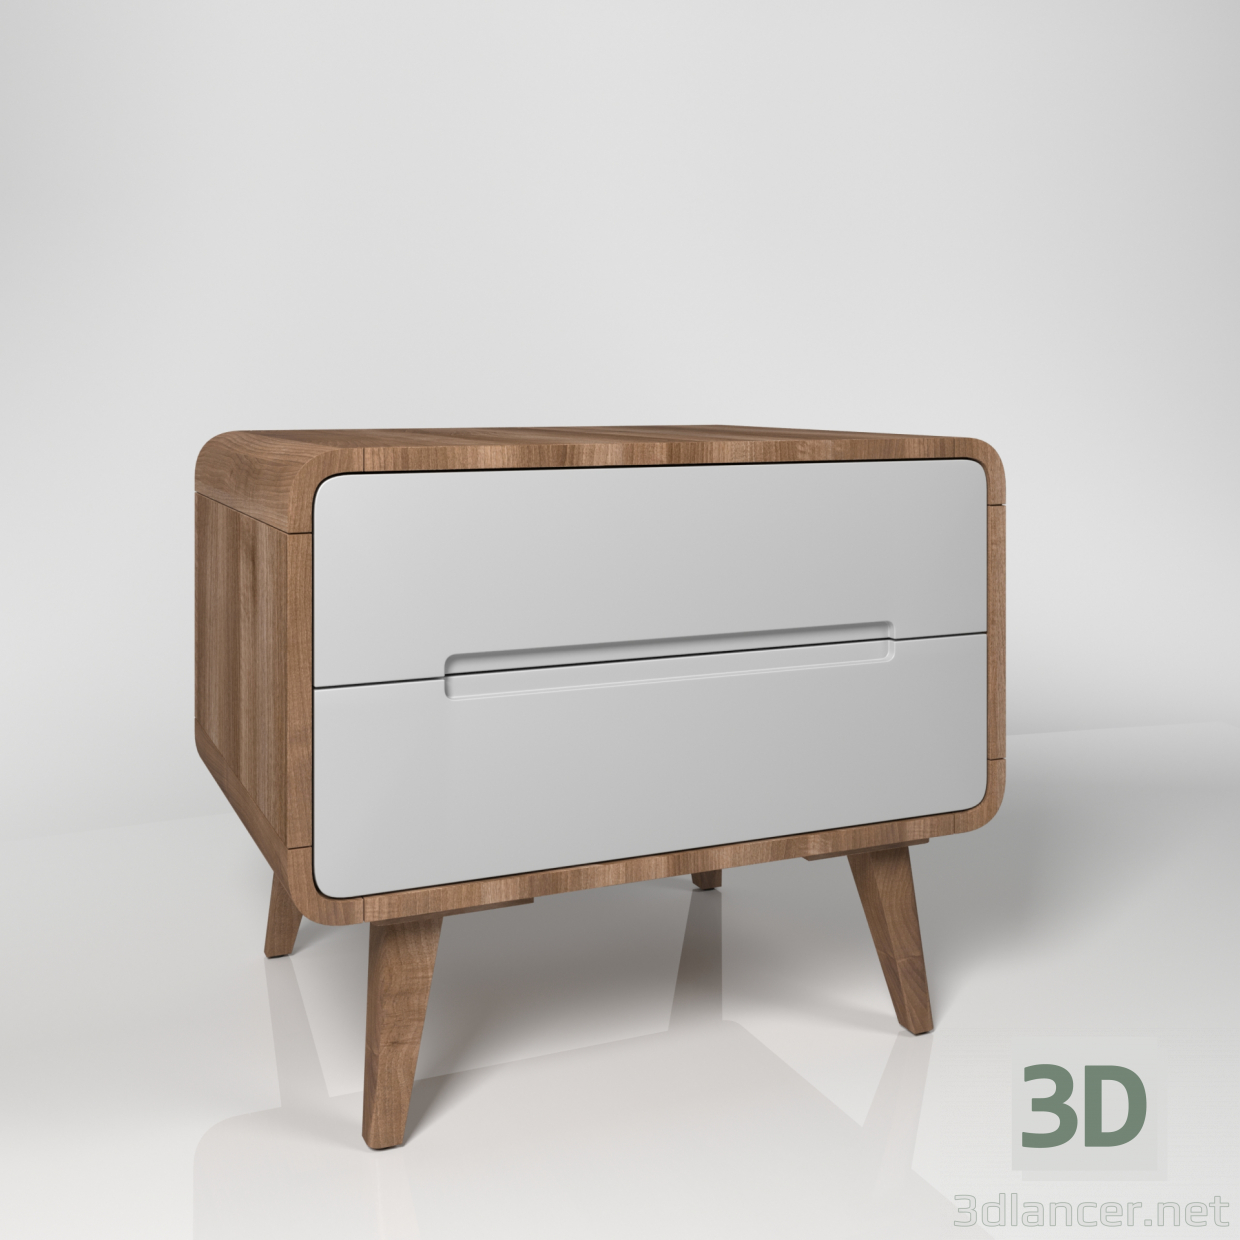 3d Nightstand - Bedside table model buy - render